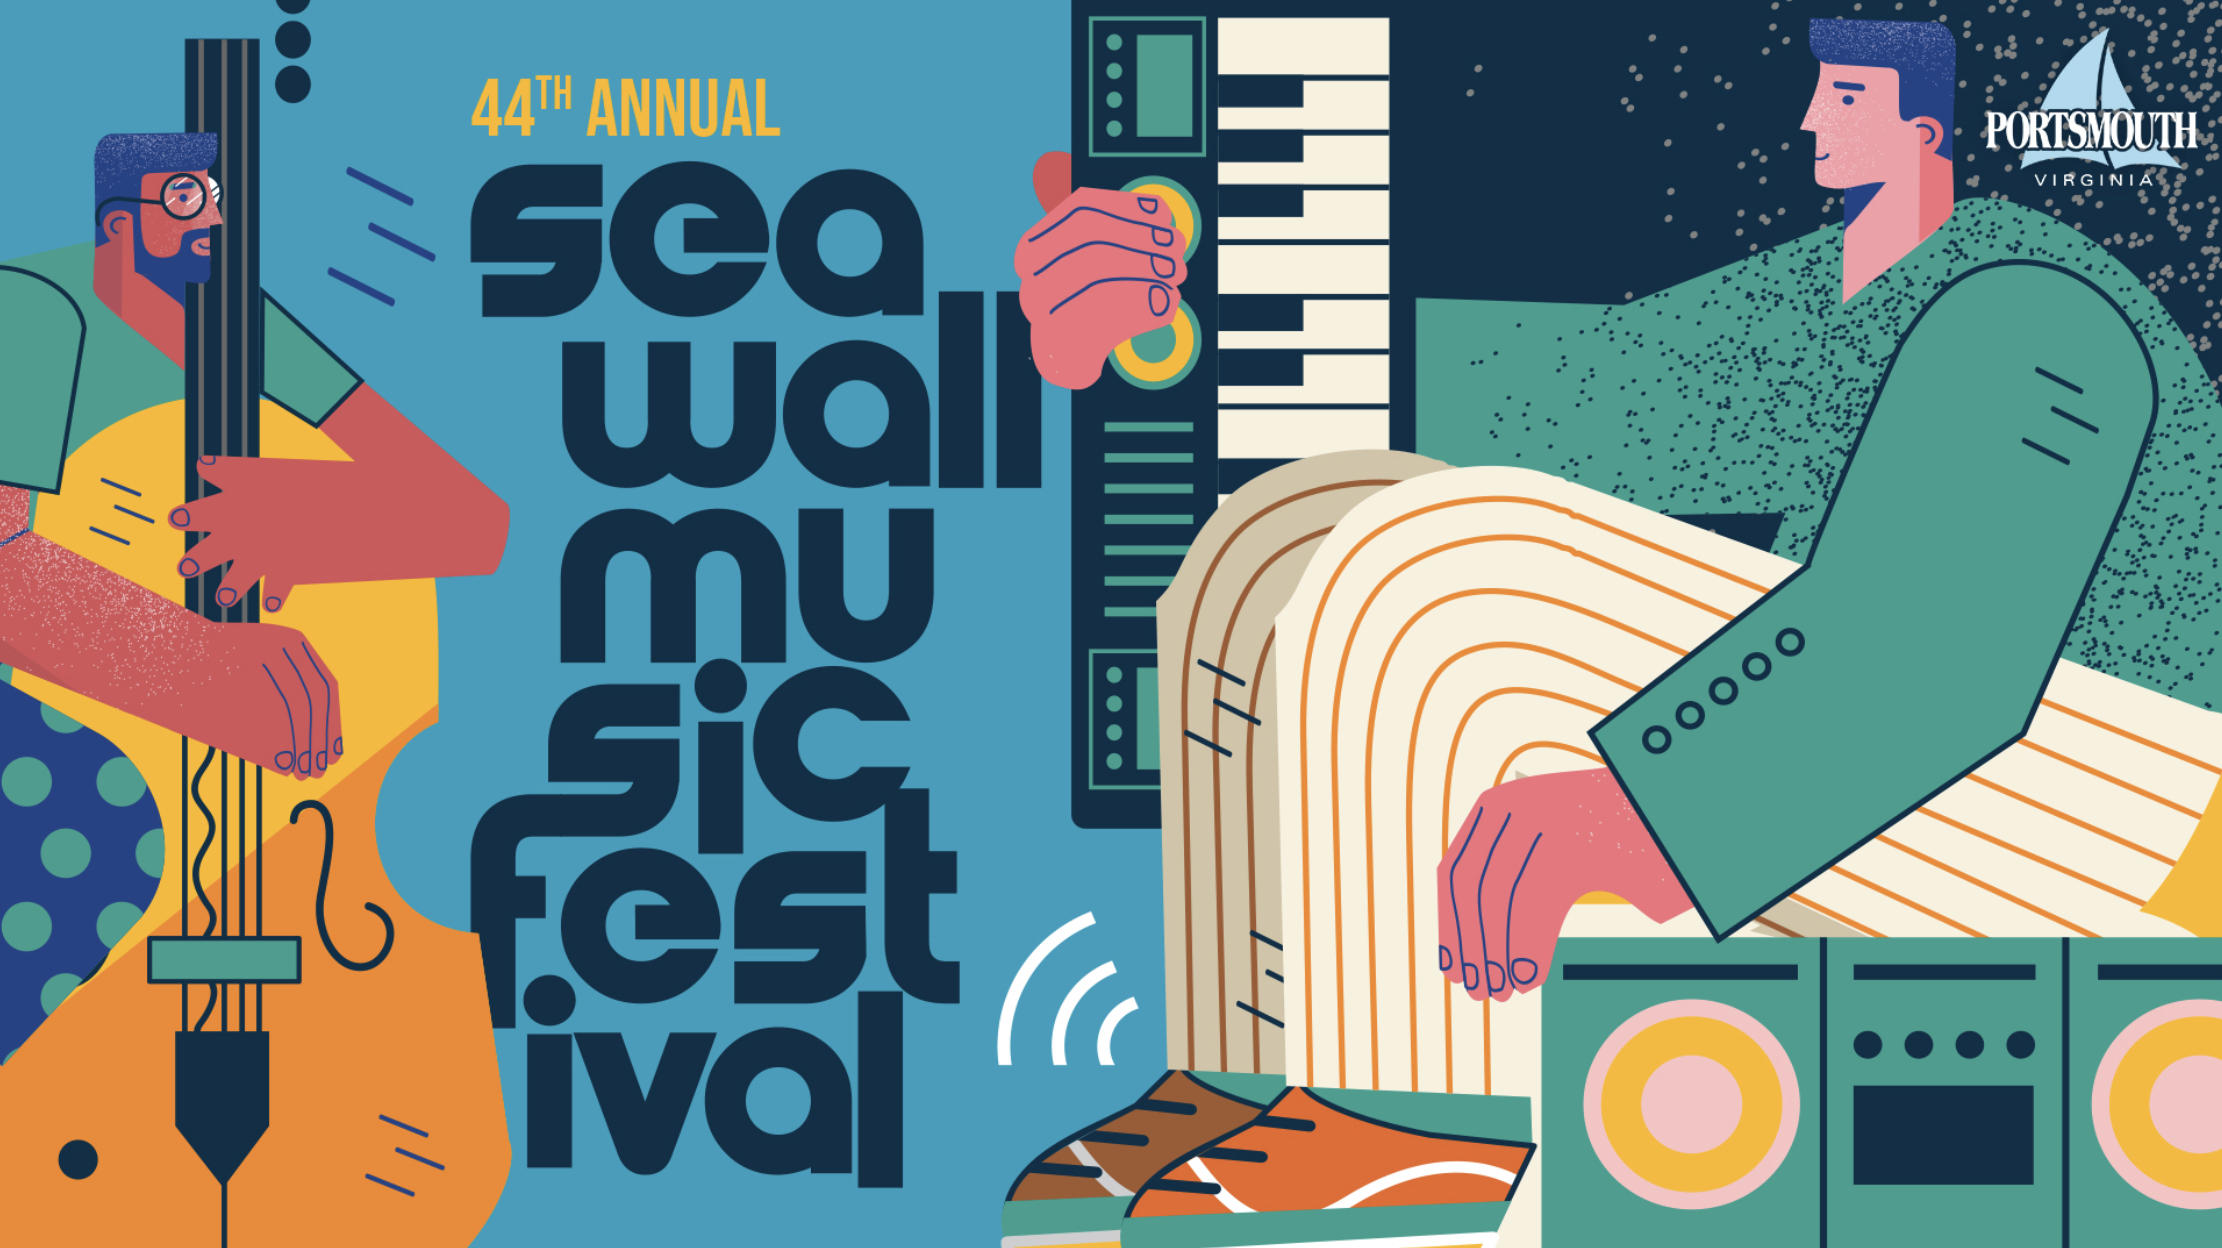 44th Annual Seawall Music Festival Olde Towne Portsmouth, VA